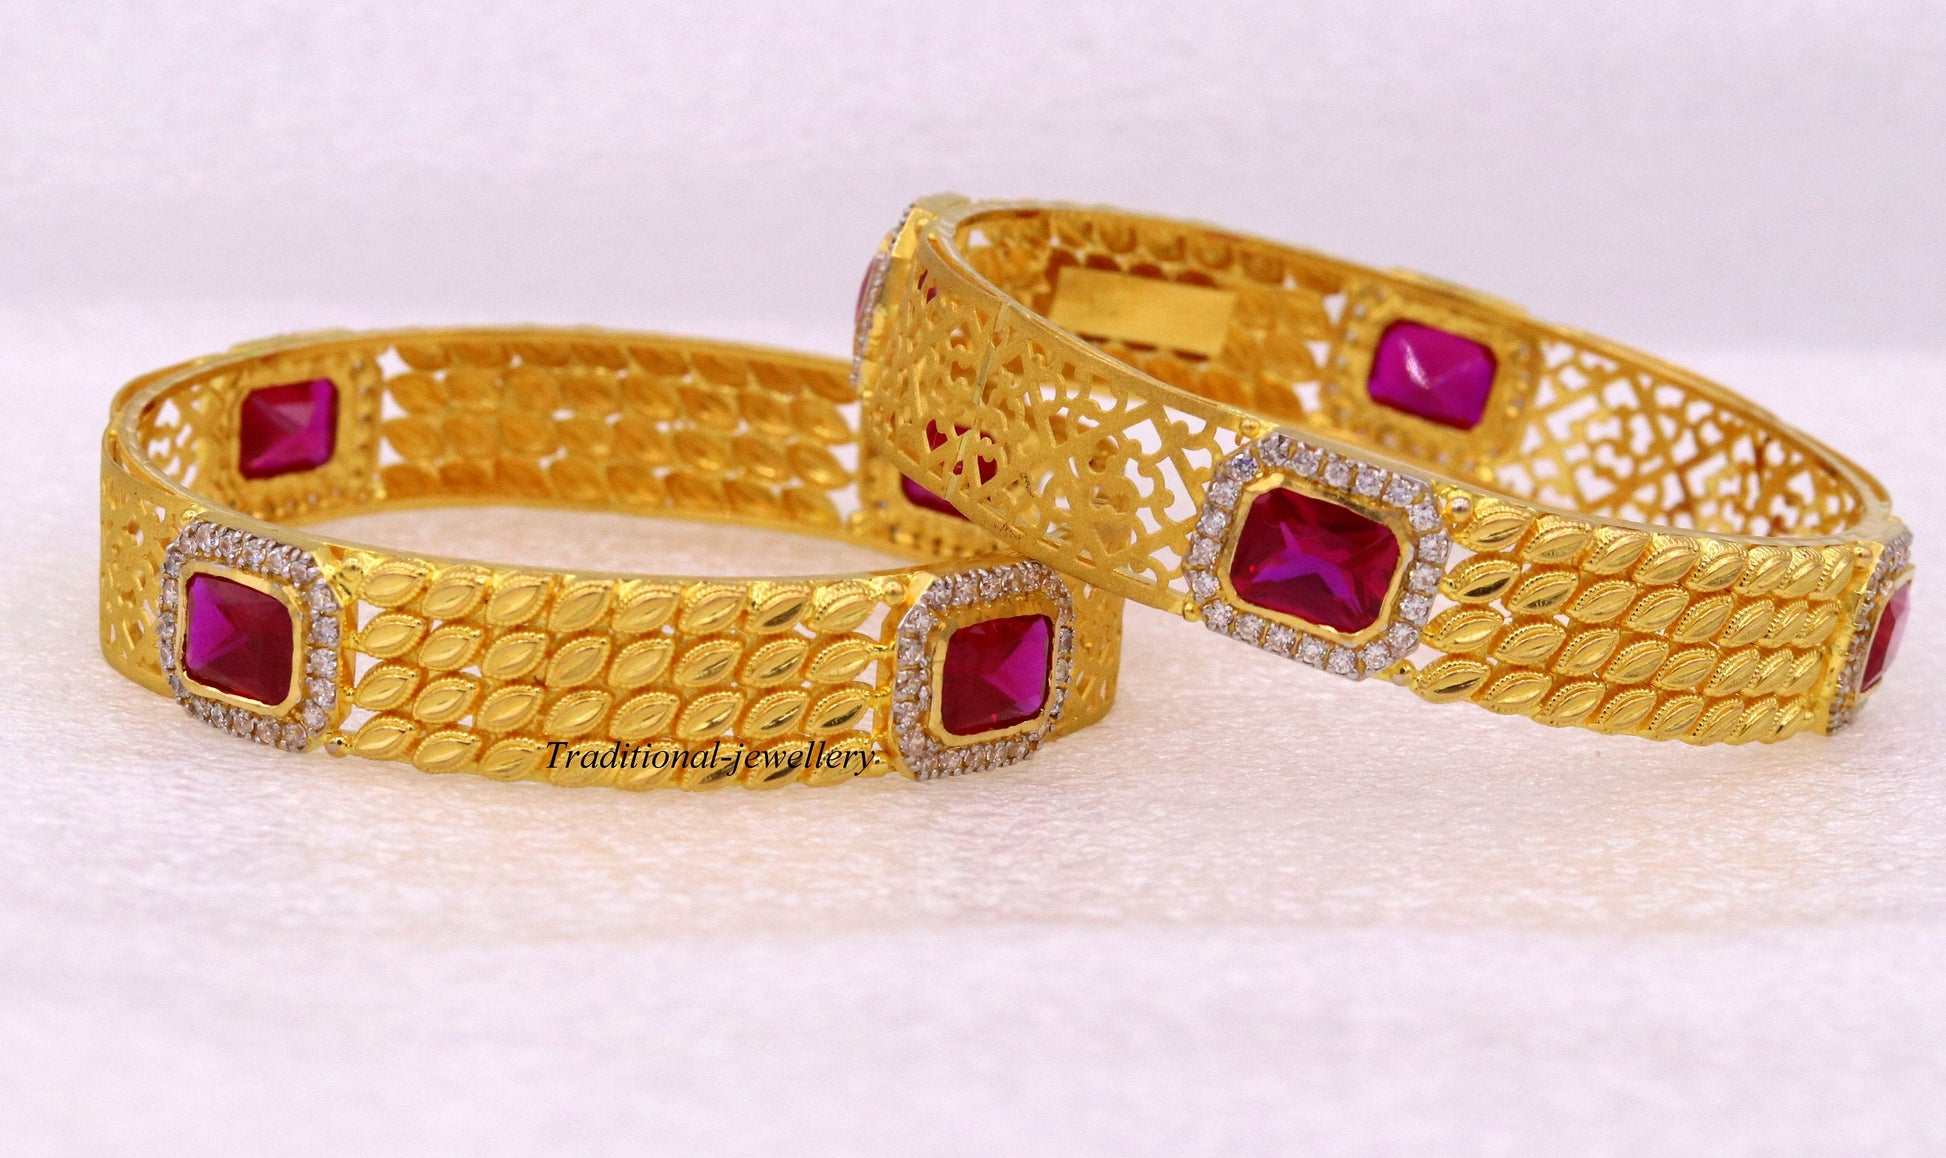 Vintage antique stylish handmade 22kt yellow gold bangle bracelet women's wedding anniversary gifting jewelry - TRIBAL ORNAMENTS